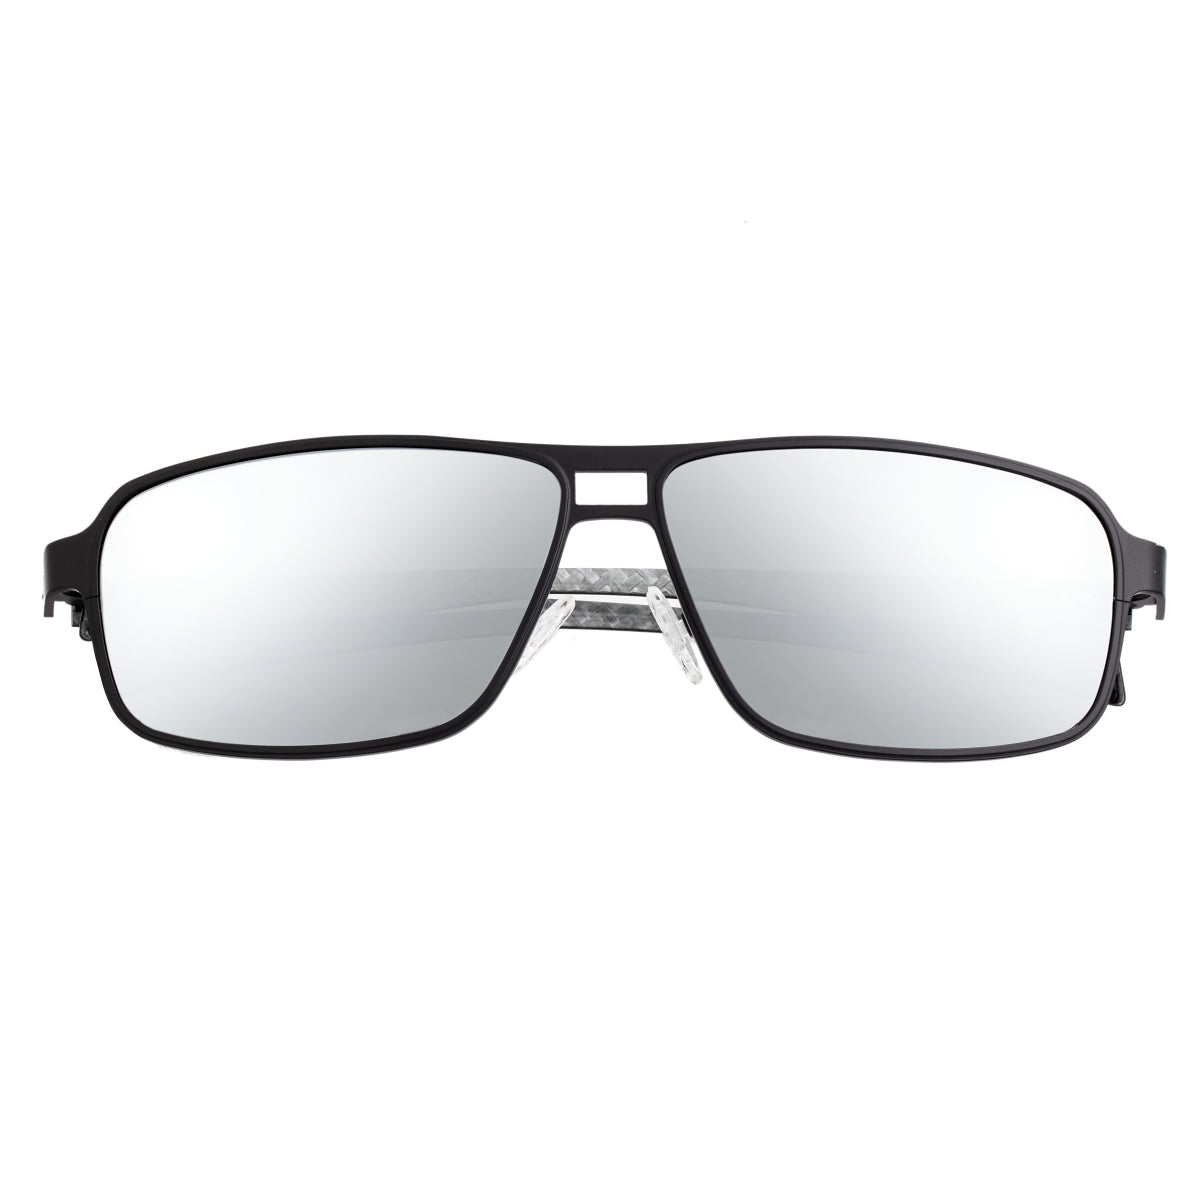 Breed Meridian Titanium and Carbon Fiber Polarized Sunglasses - Black/Silver - BSG003BK